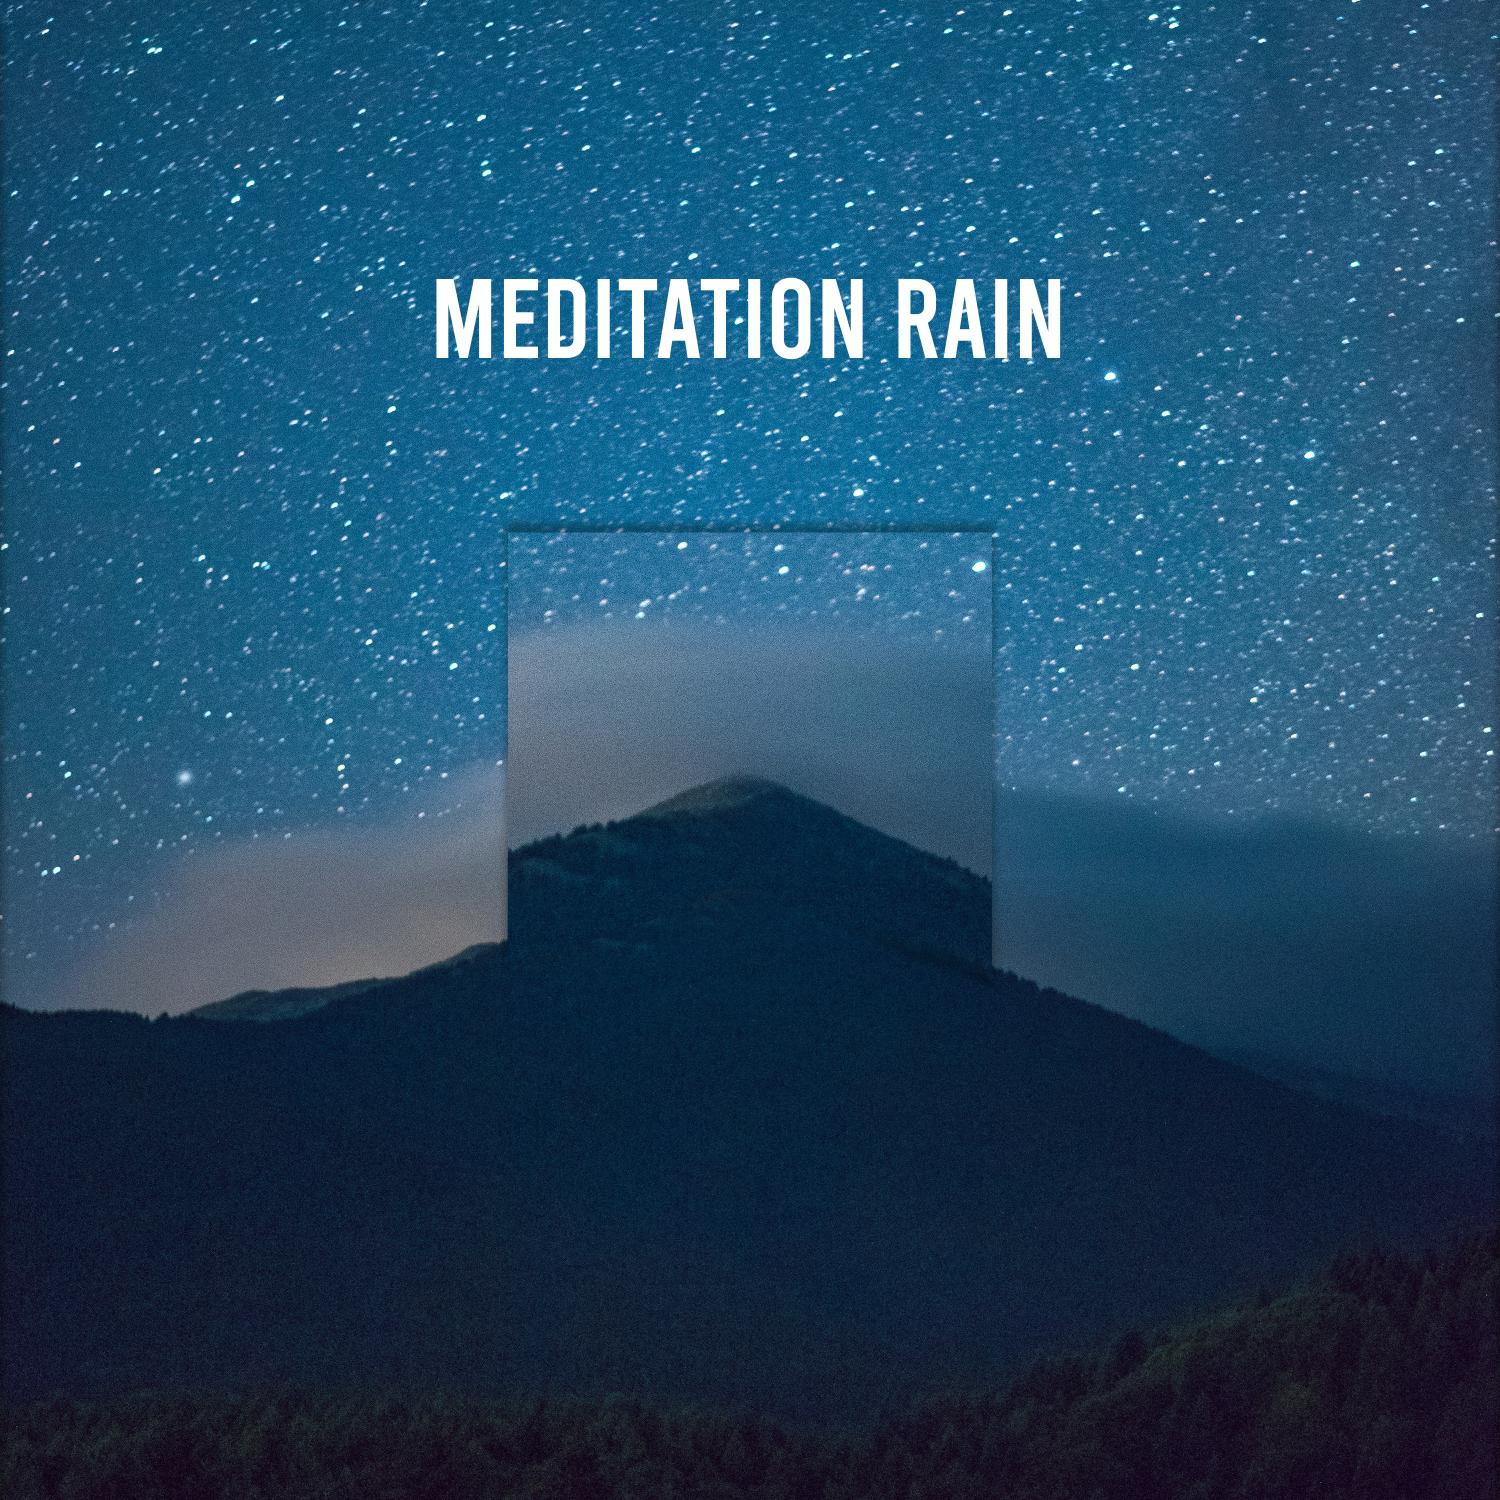 10 RainNoises for Meditation